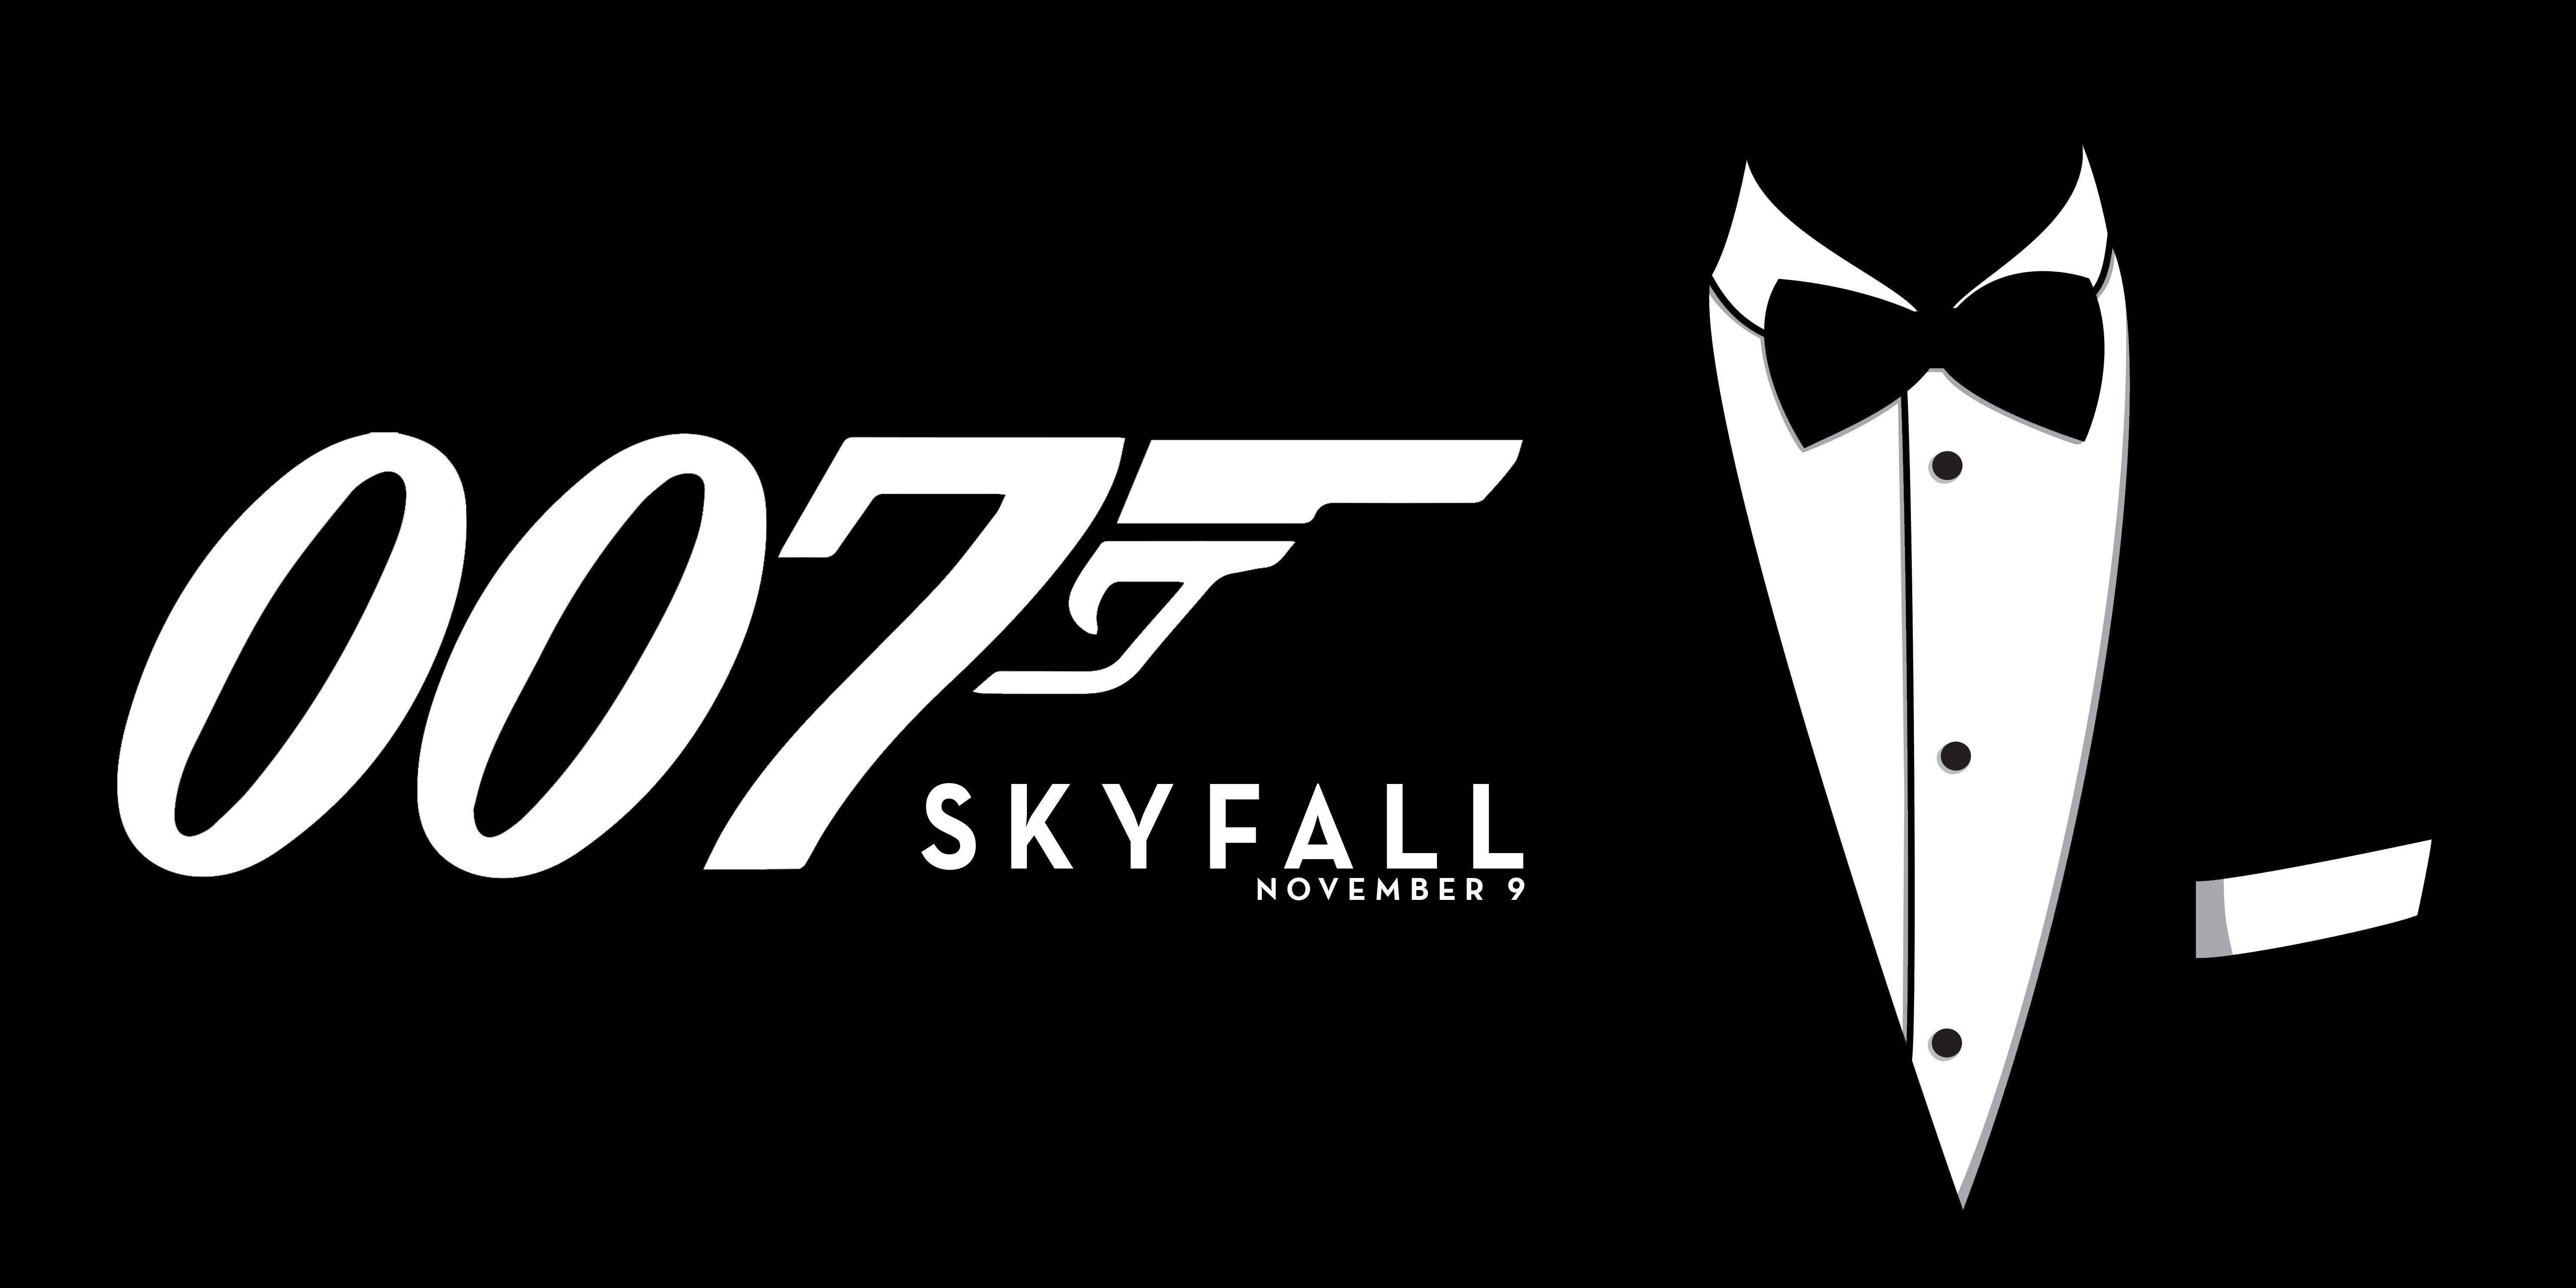 OO7 Logo - James Bond 007 Wallpapers - Wallpaper Cave